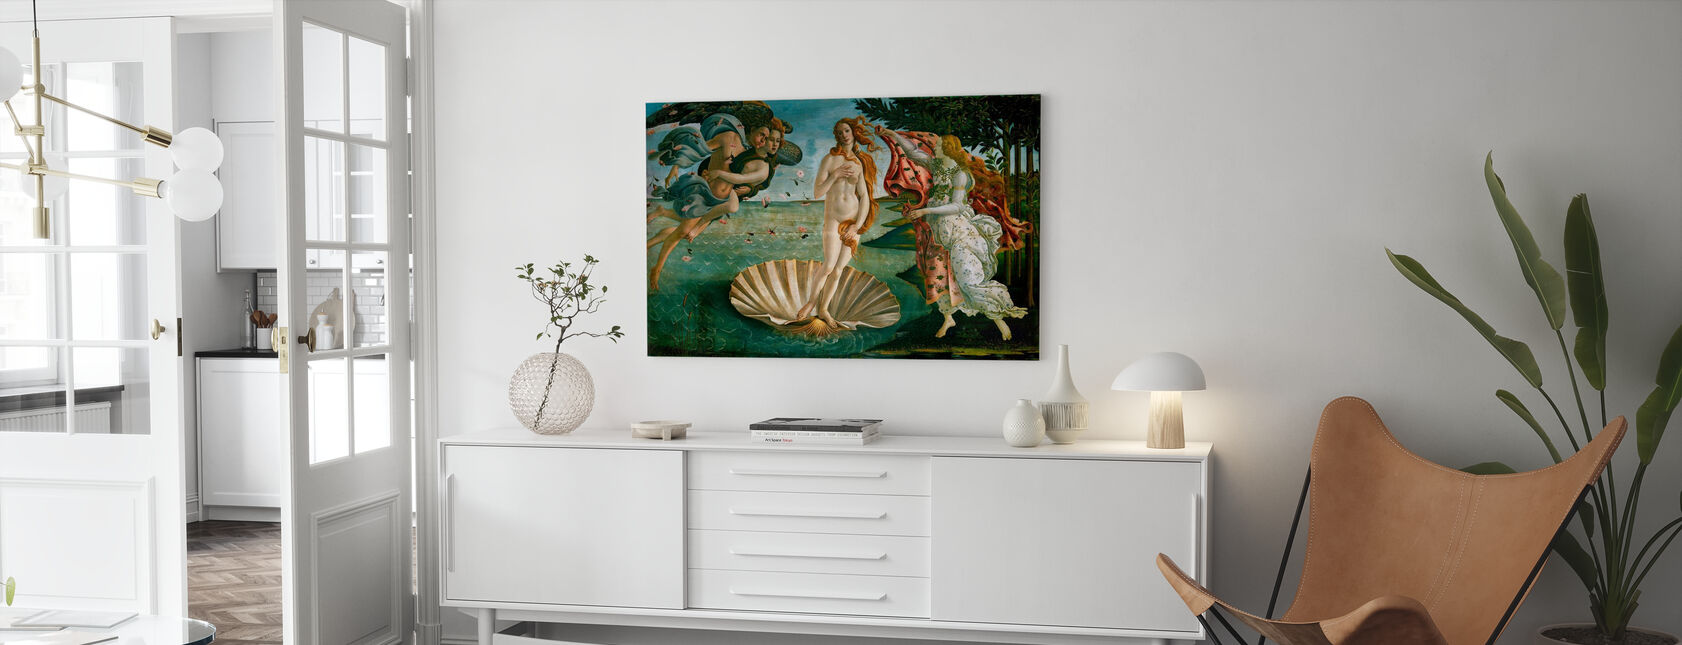 Sandro Botticelli - Birth of Venus - Canvas print - Living Room